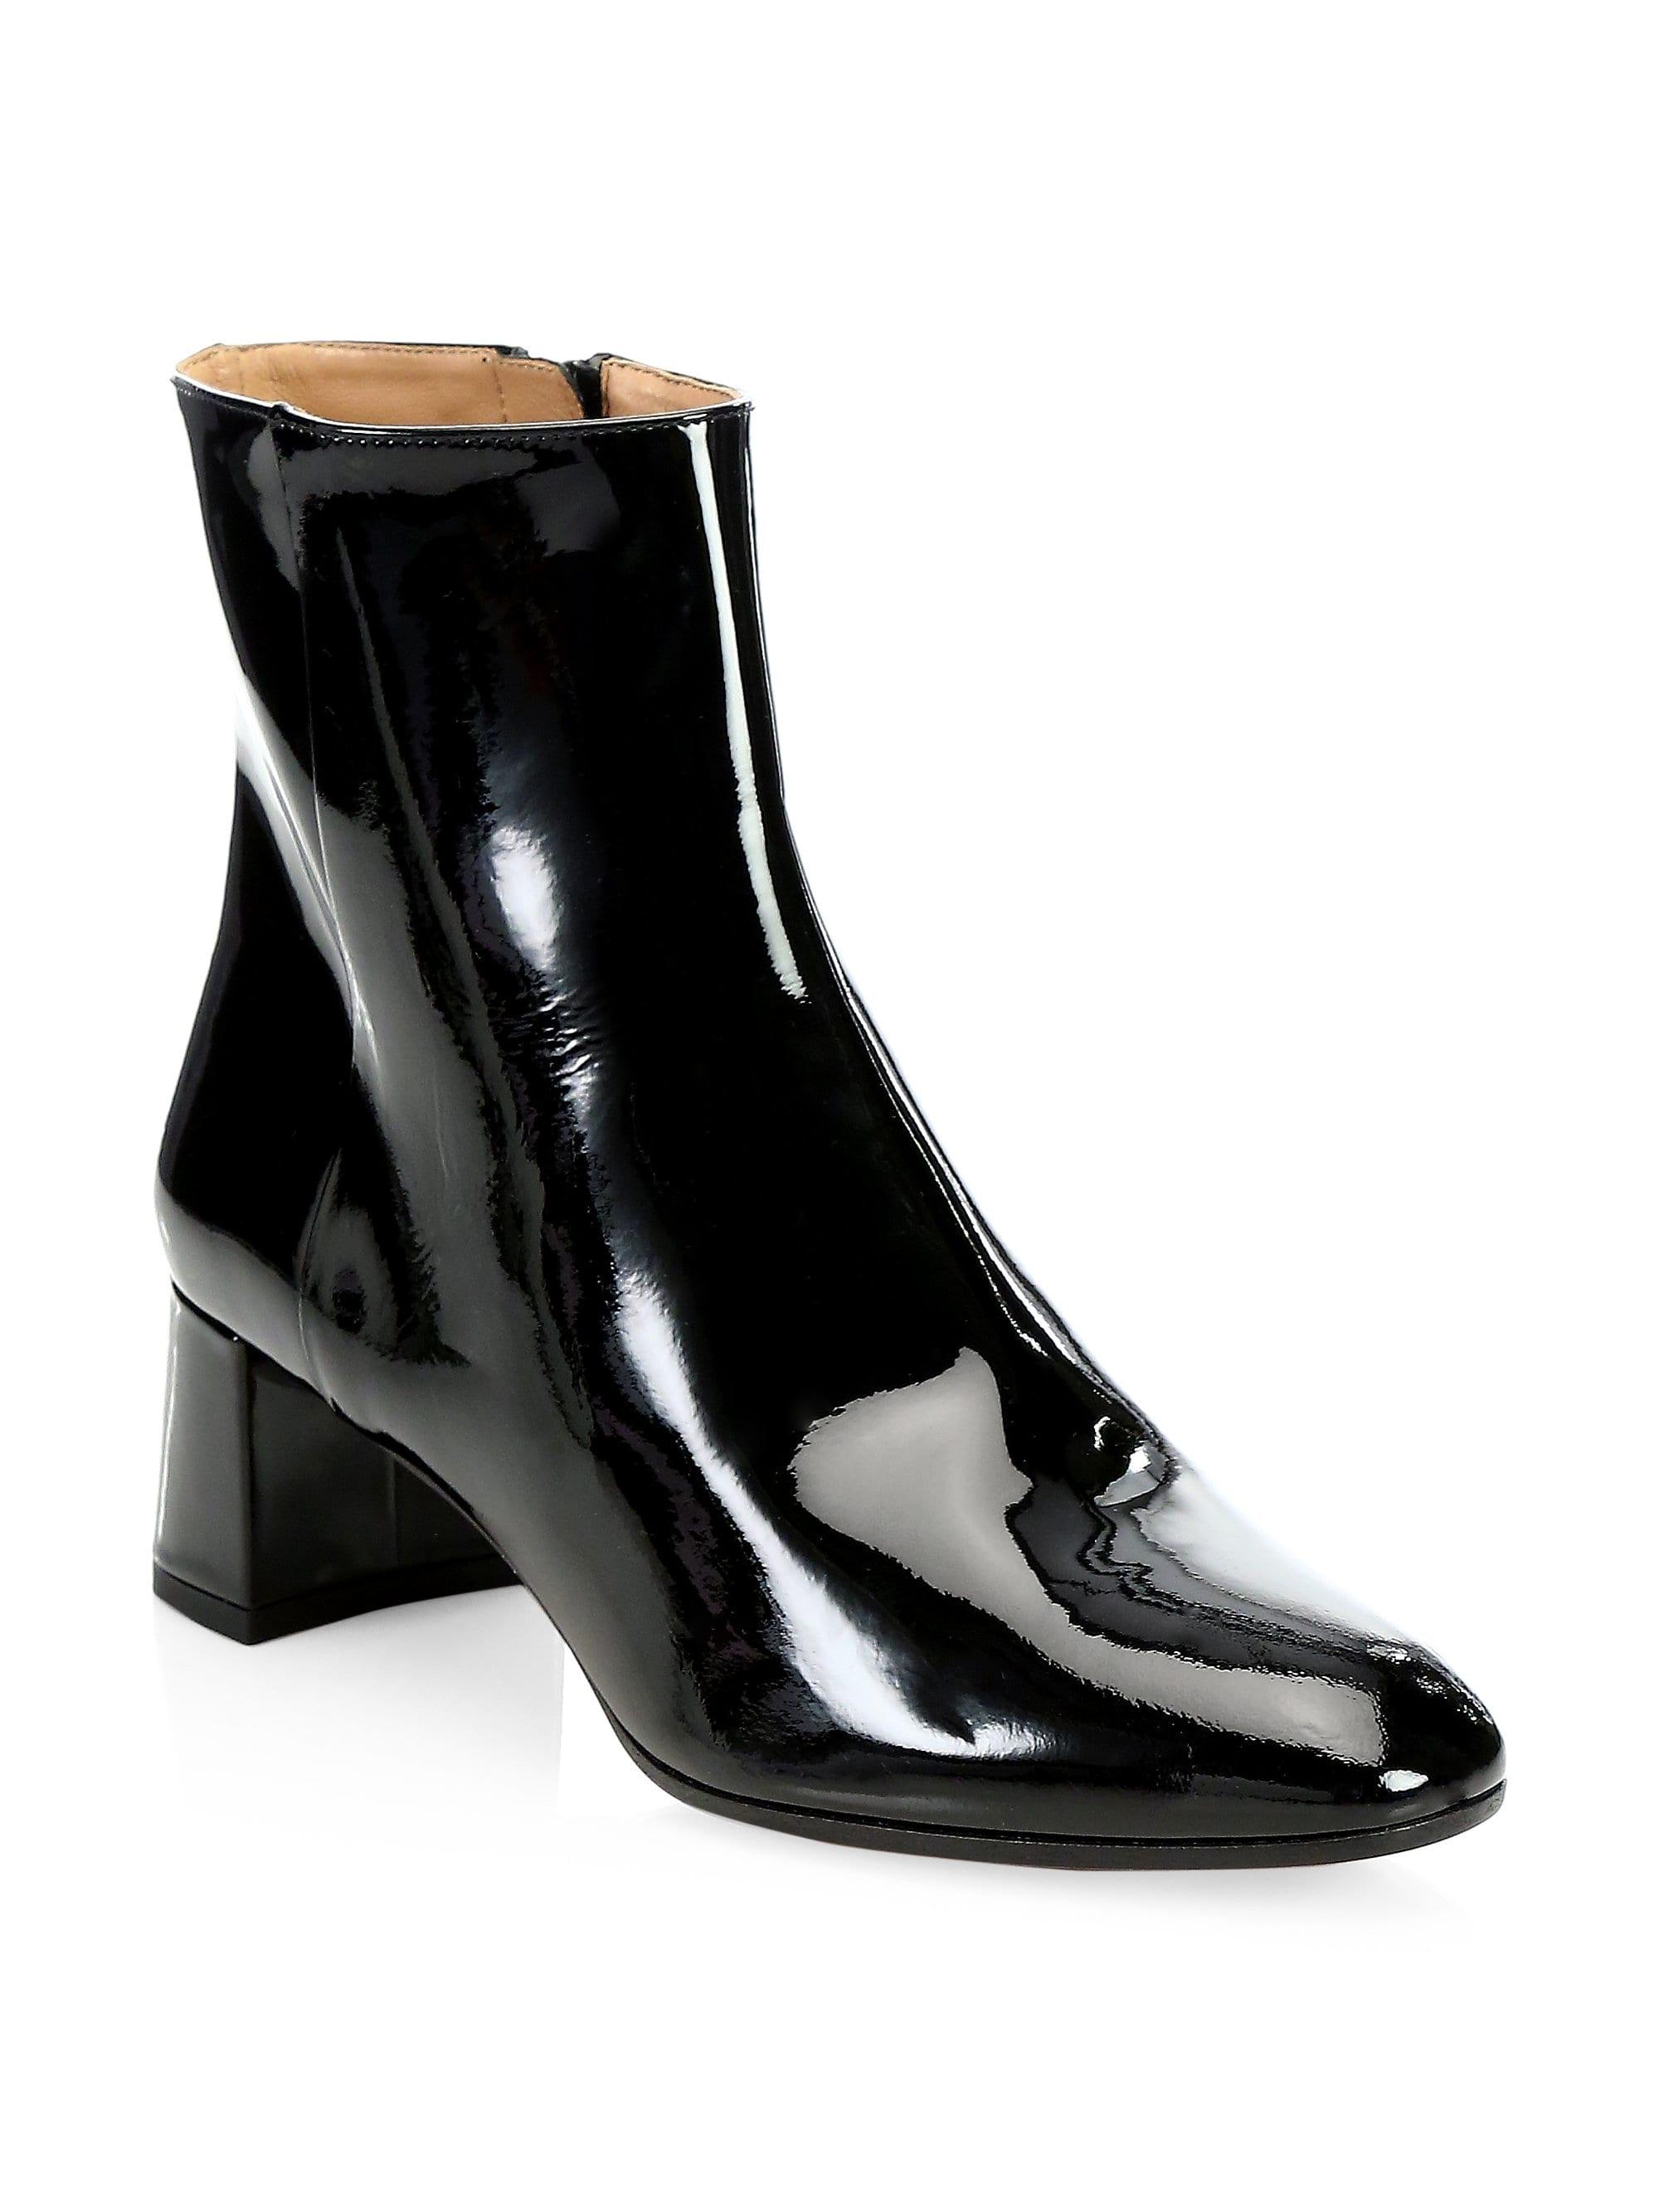 Aquazzura Women's Grenelle Patent Leather Ankle Boots - Black - Lyst